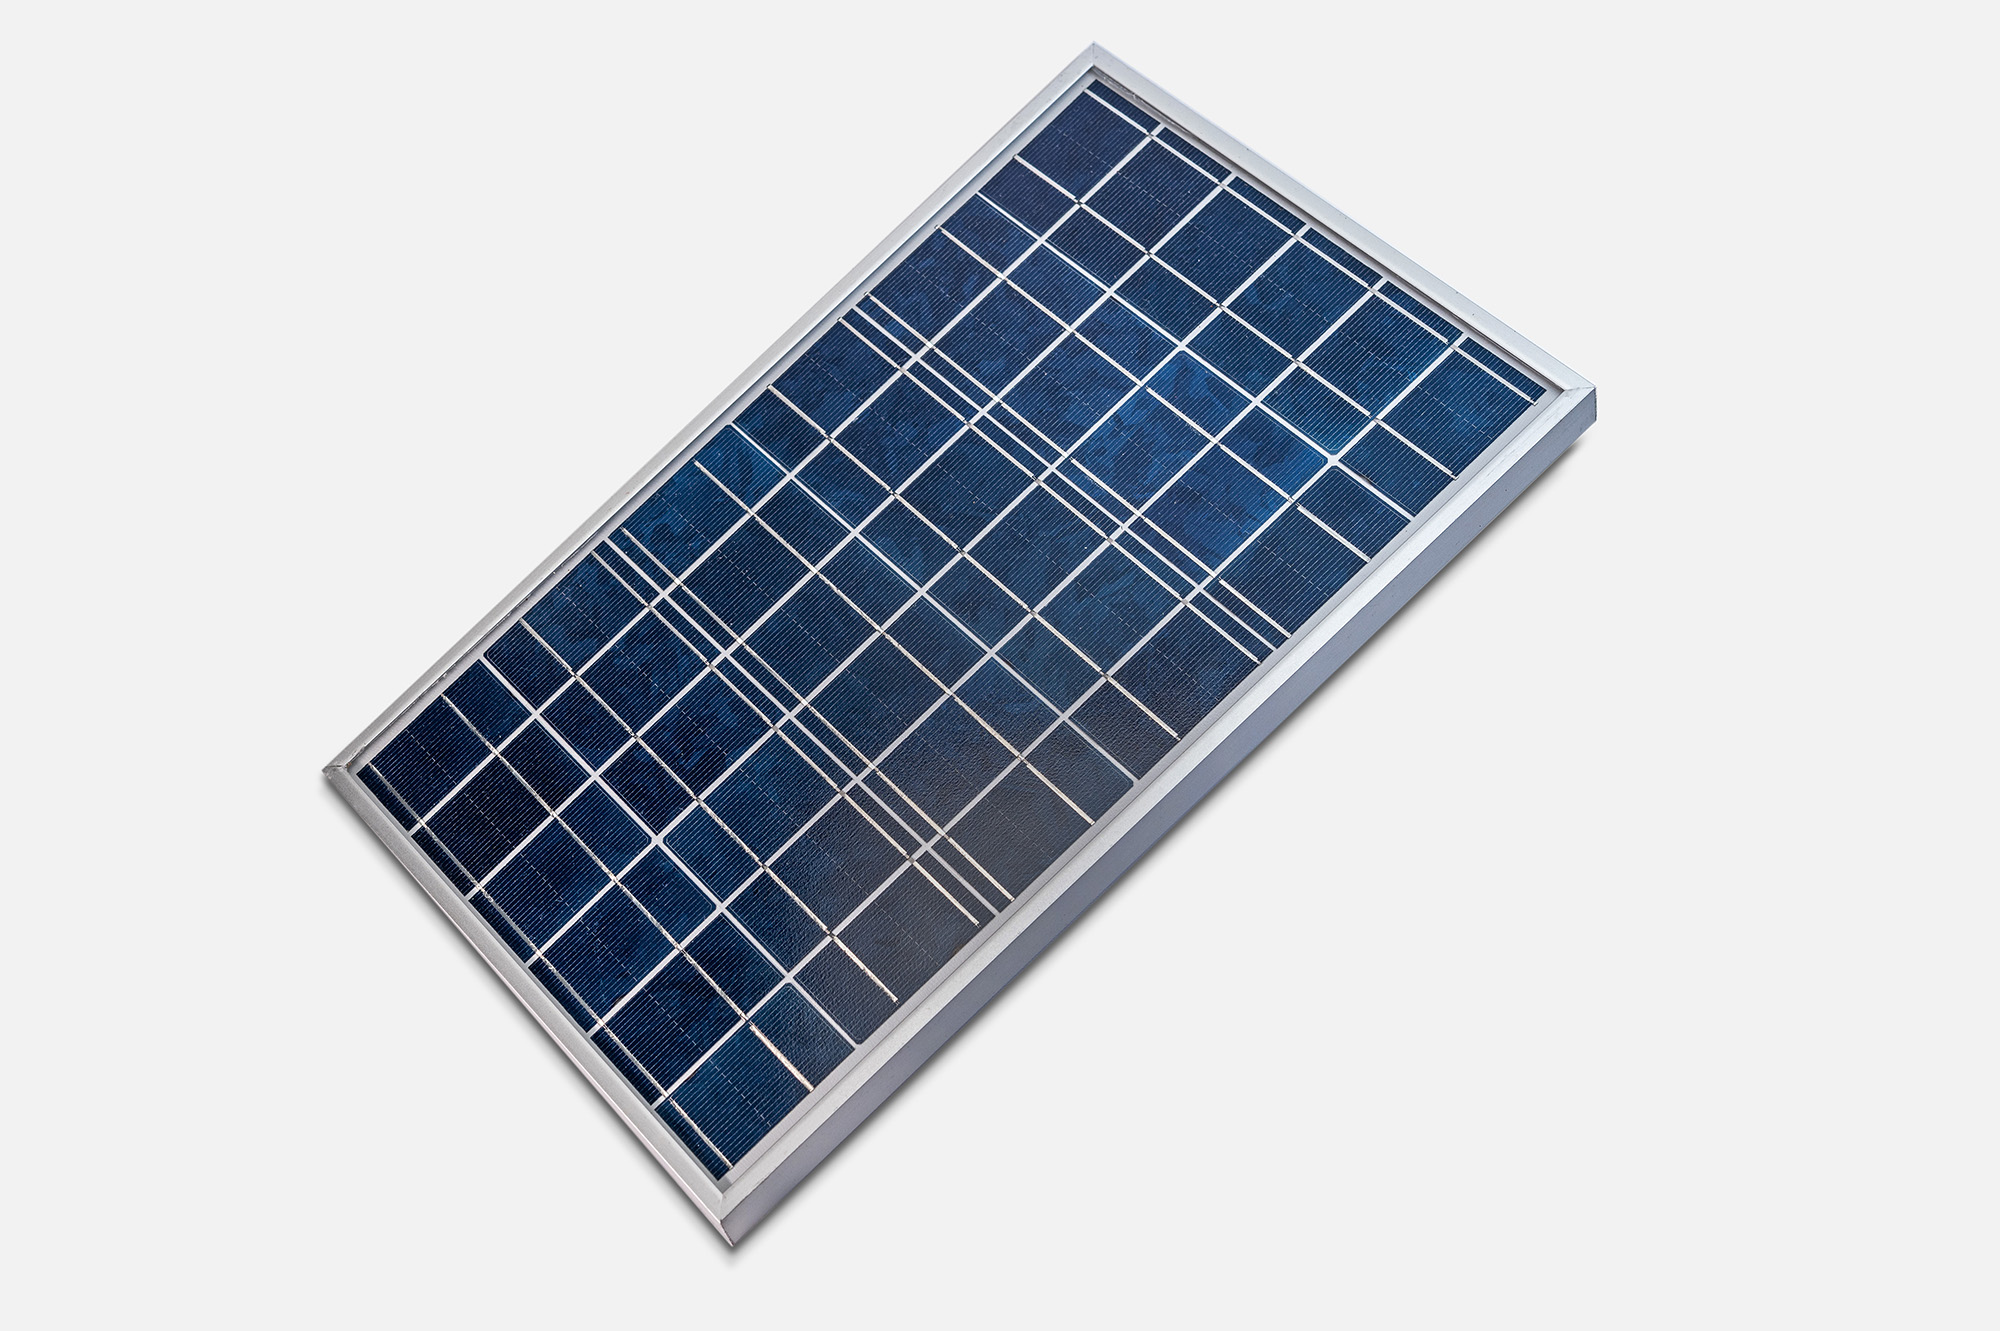 Solar Panel 10W